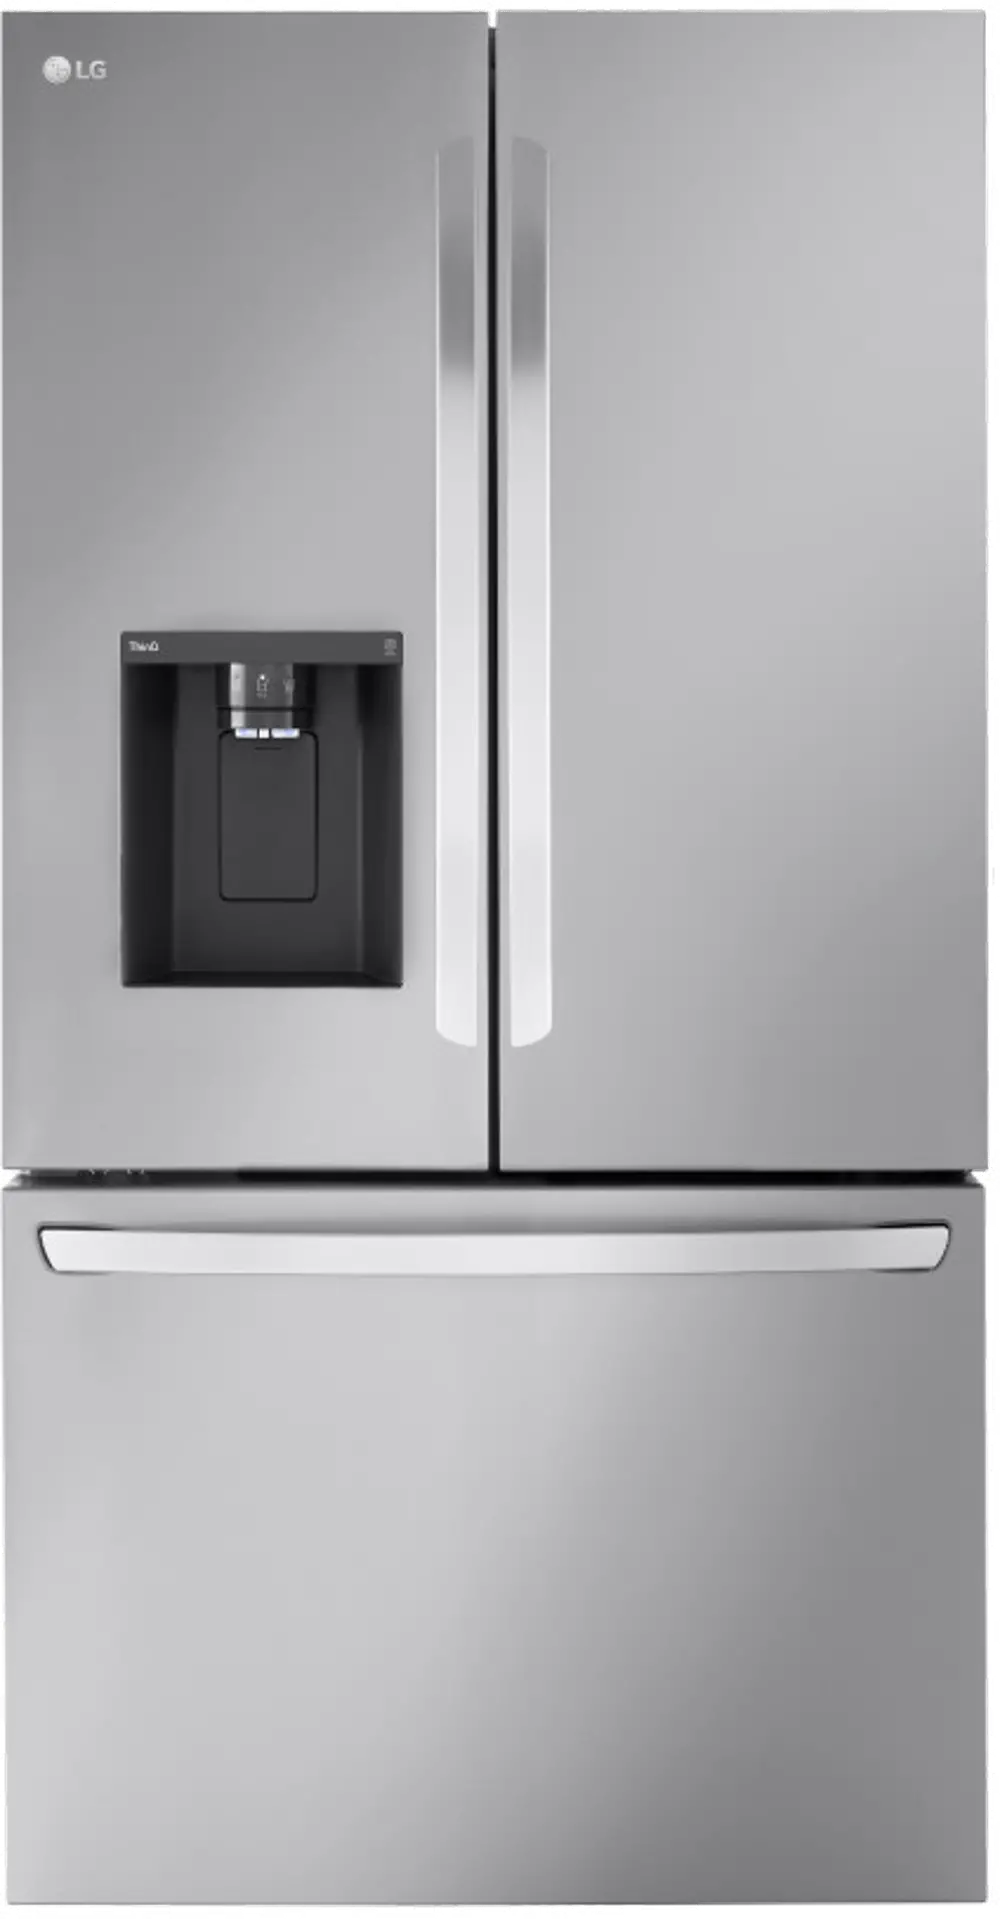 LRFXC2606S LG 25.5 cu ft French Door Refrigerator - Counter Depth Stainless Steel-1